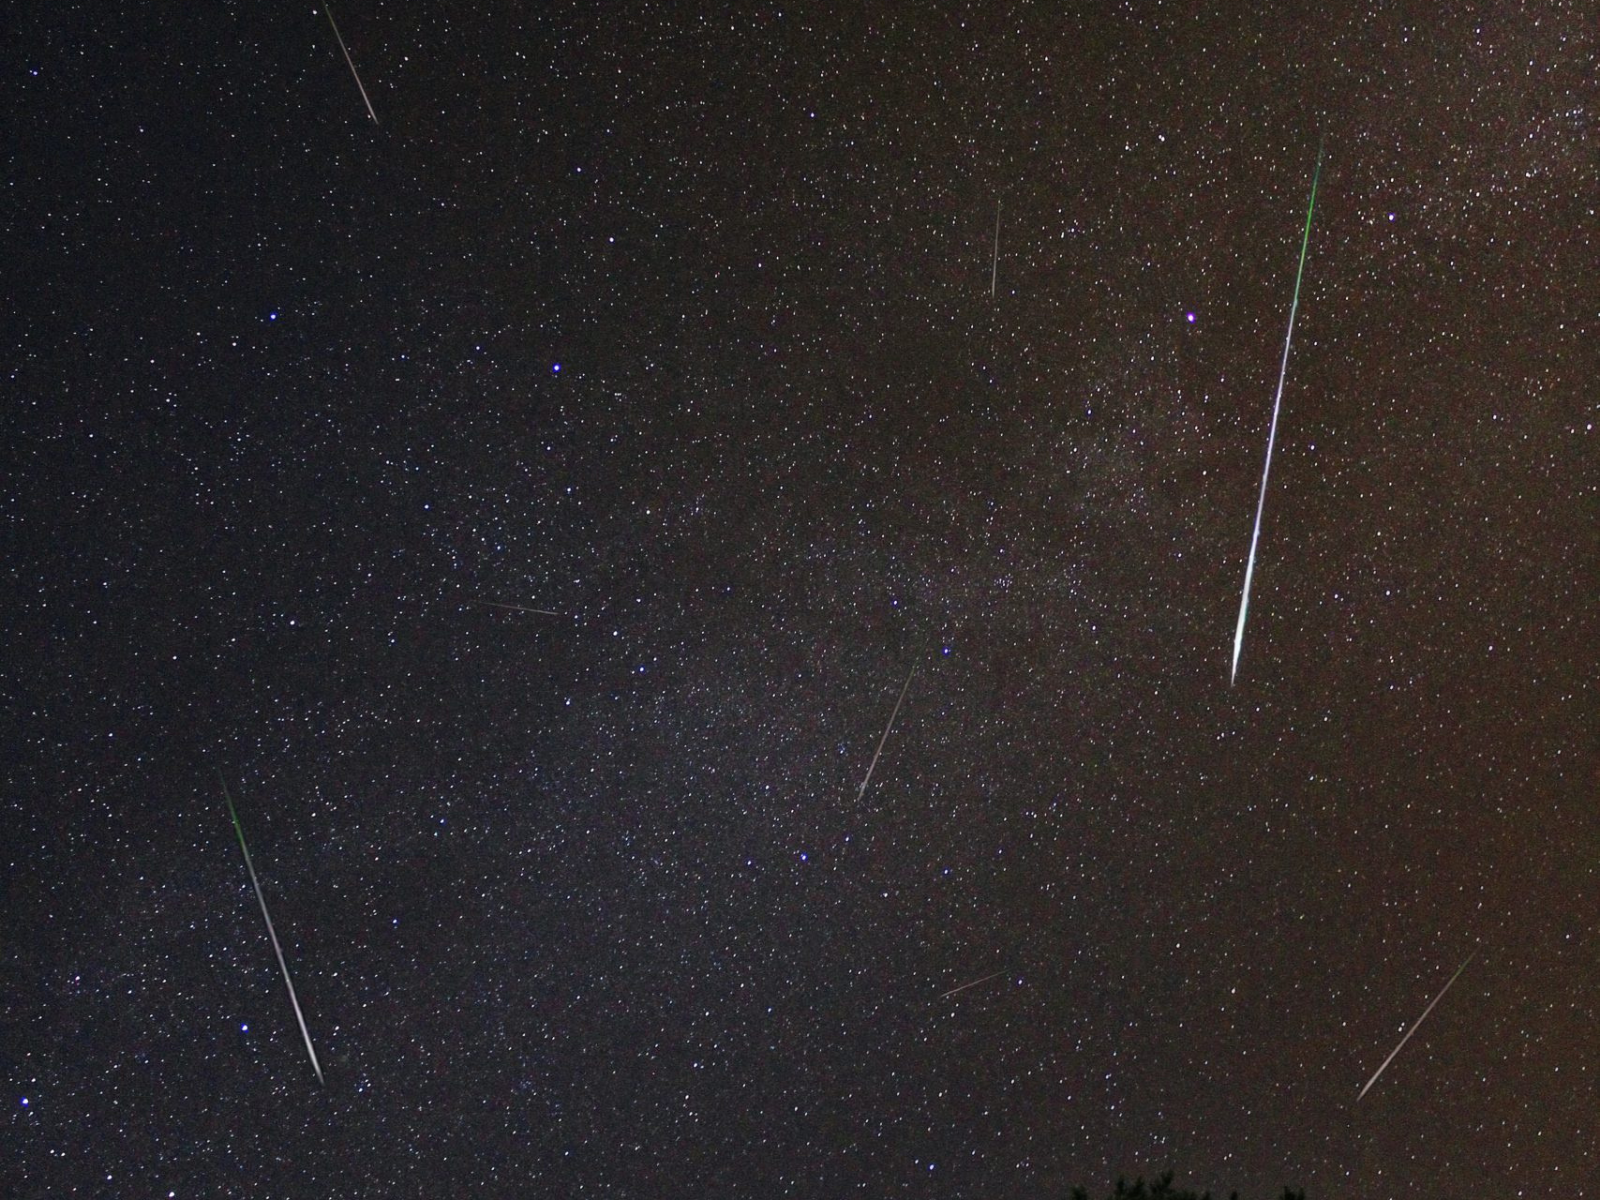 Shooting stars streaking across a clear night sky.